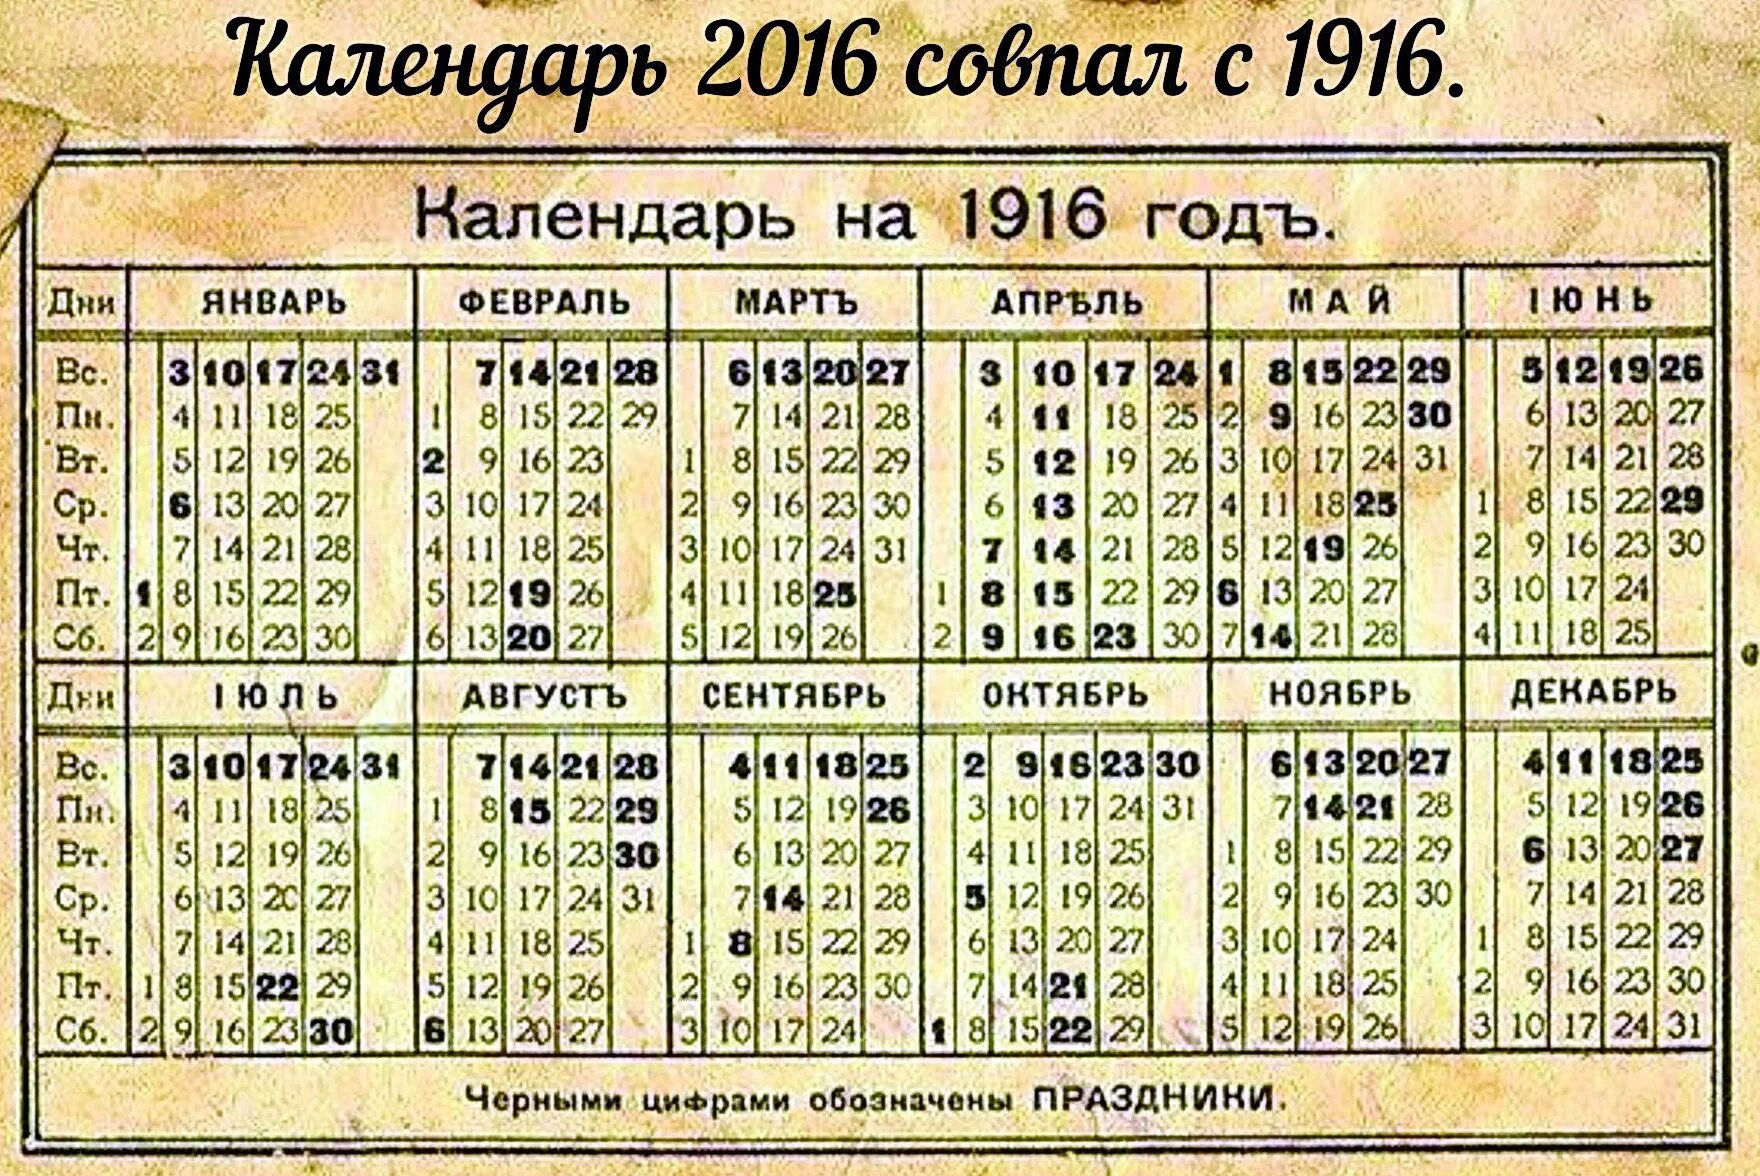 Какой год был сто лет назад. Старый календарь. Календарь 1916 года. Календарь старого стиля. Календарь 1916 года новый стиль.